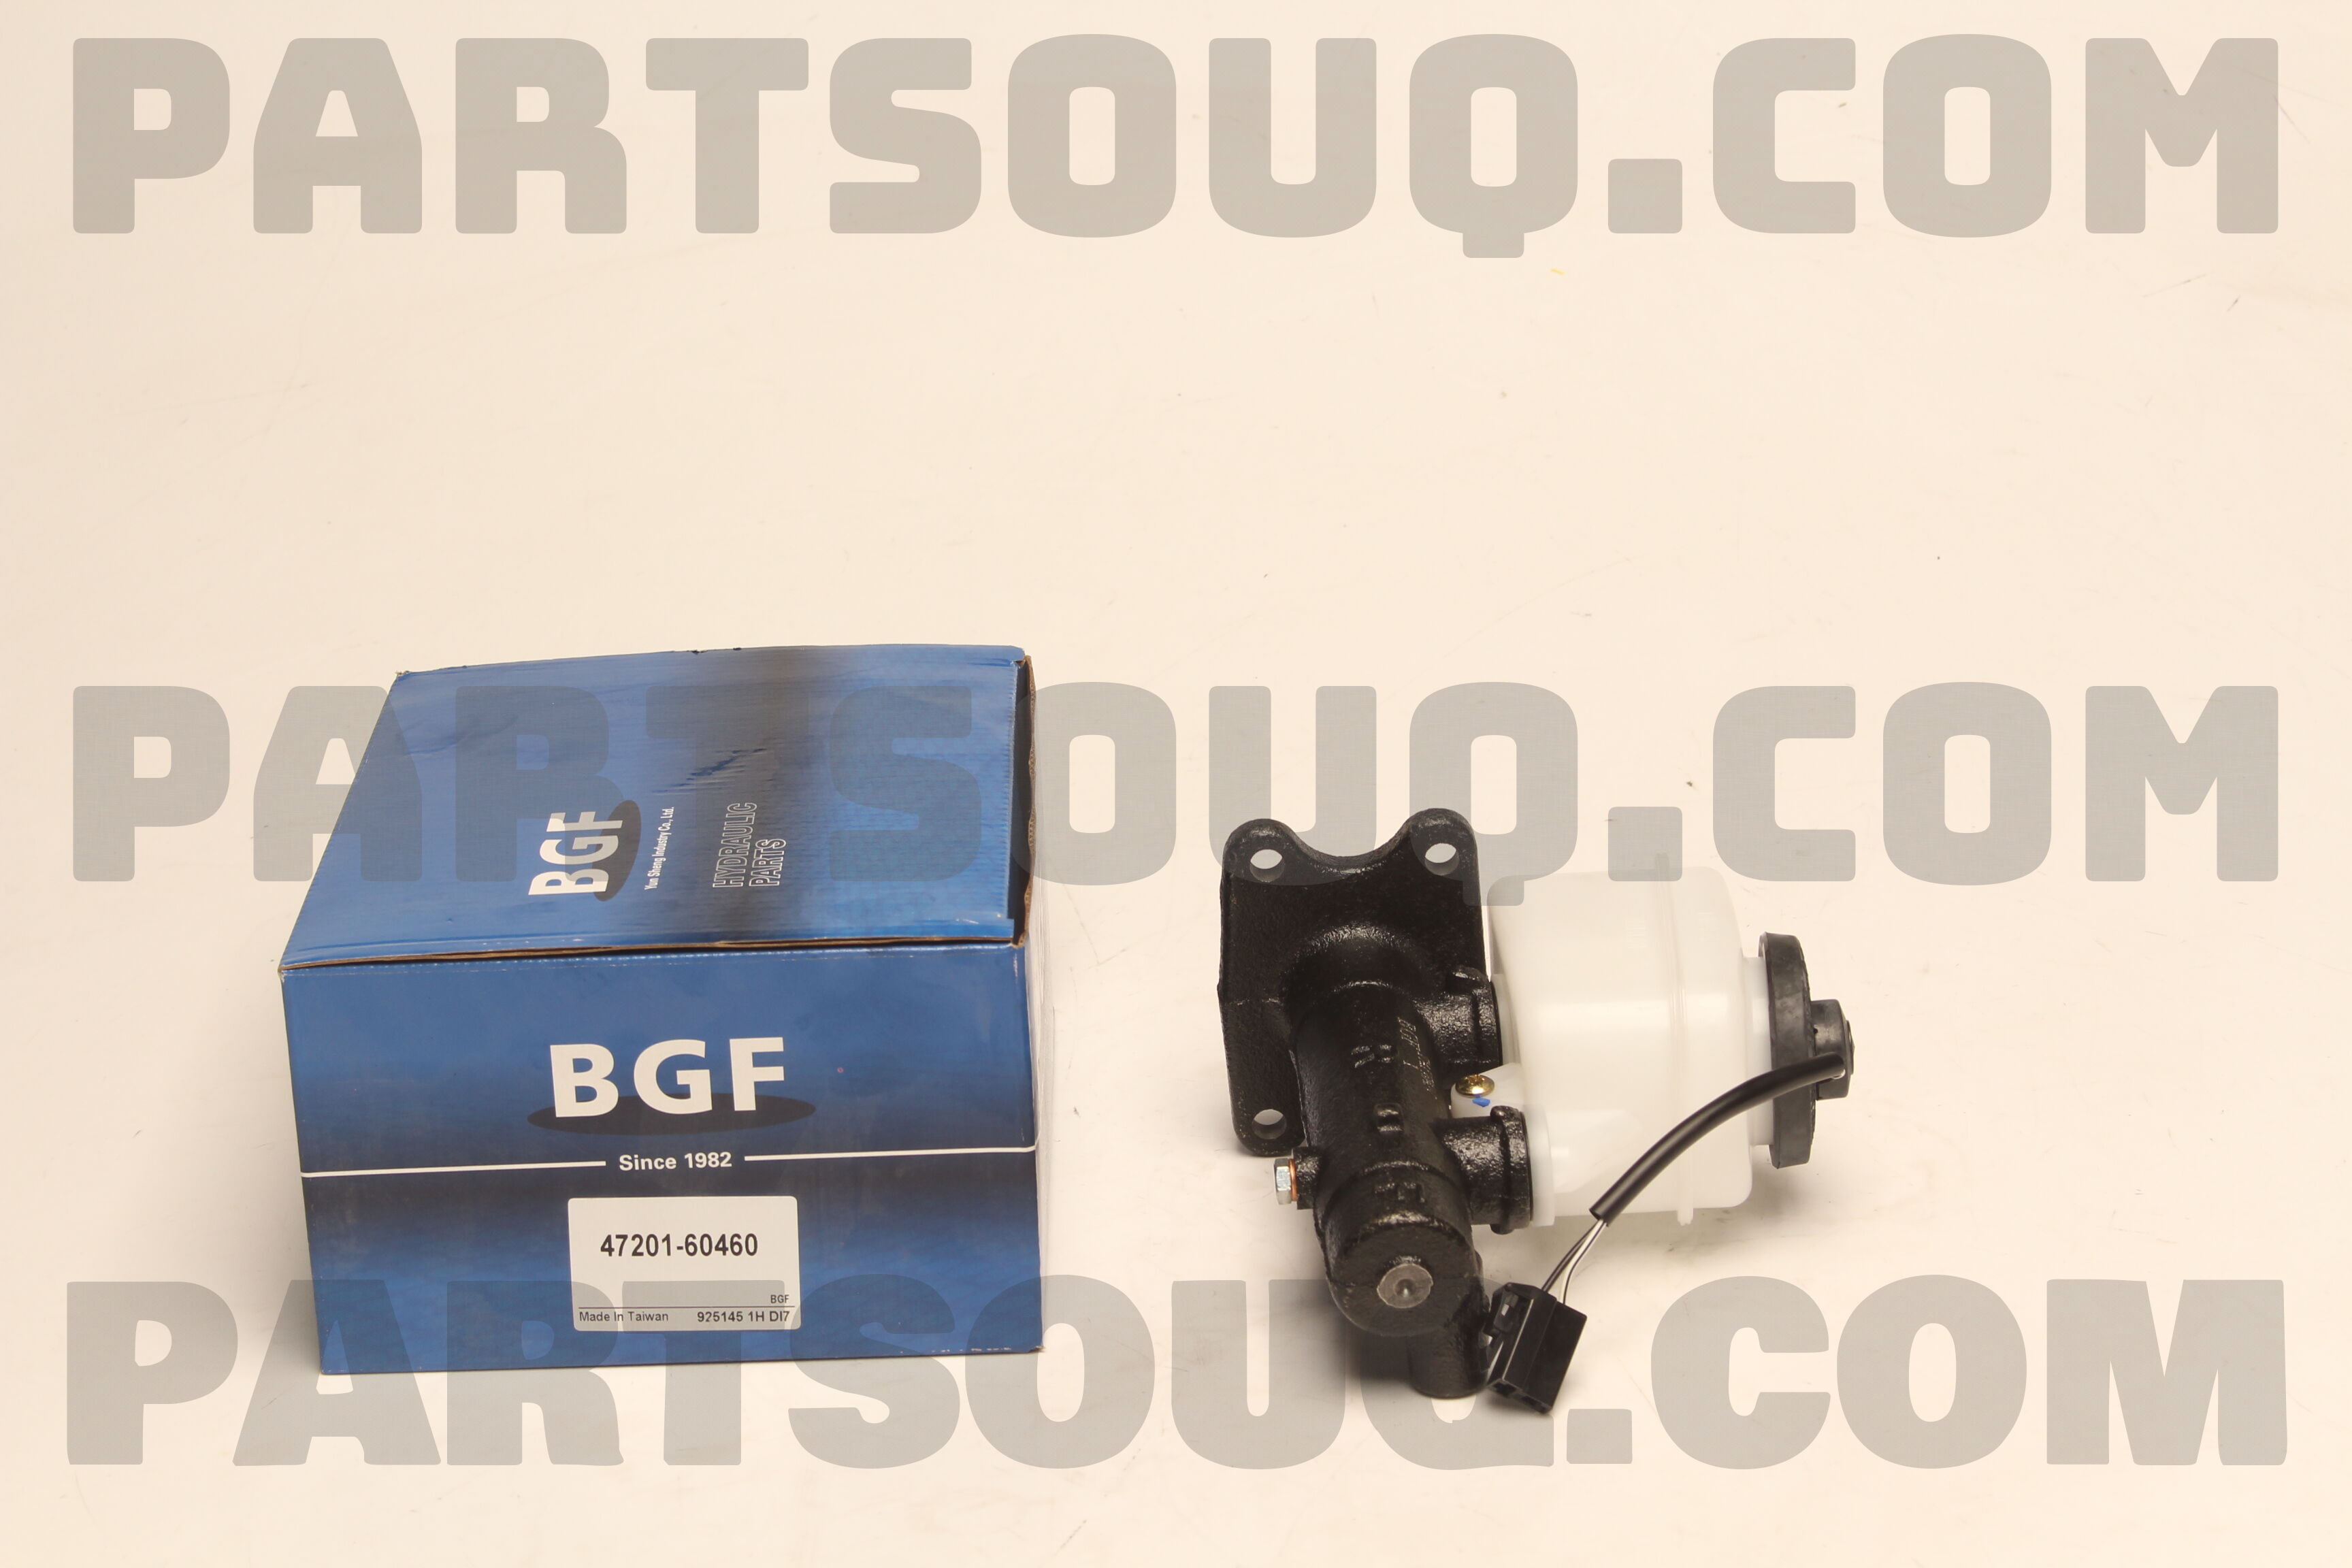 BMC ASSY 4720160460 | BGF Parts | PartSouq